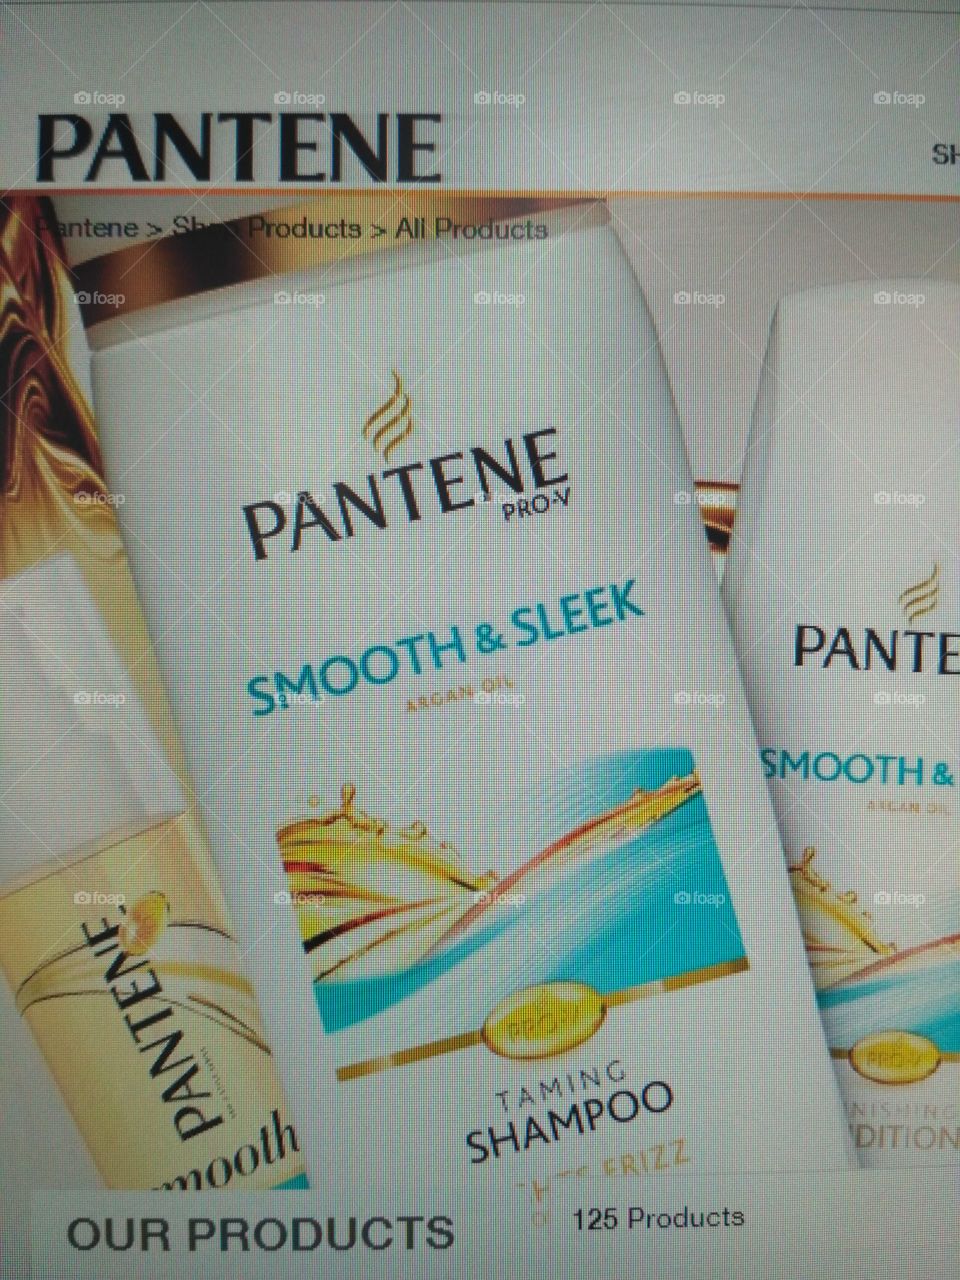 Pantene smooth and